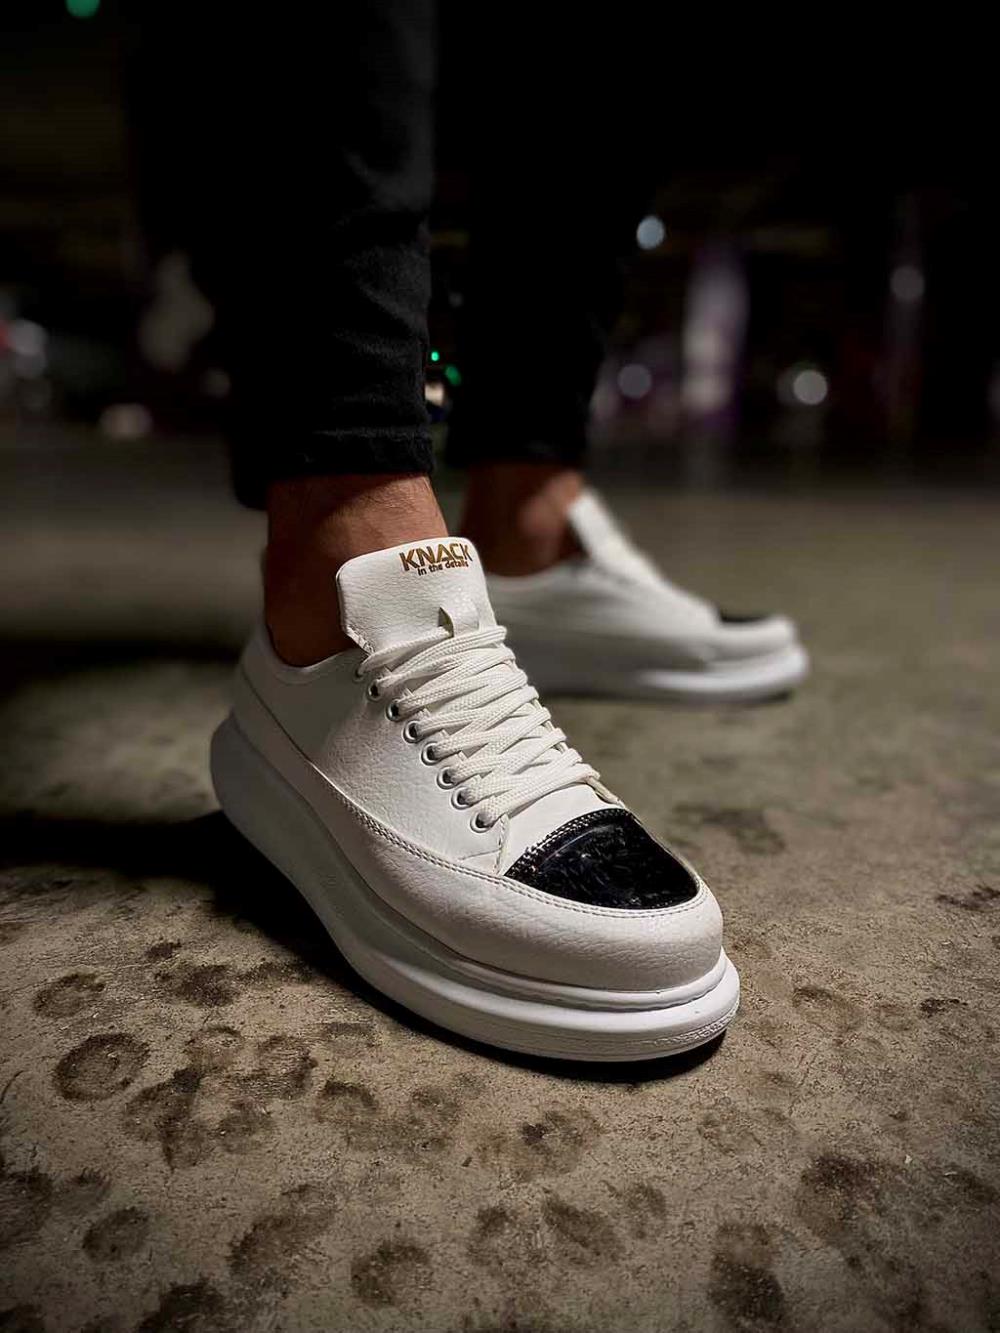 Men's Knack Sneakers Shoes 813 White - STREETMODE ™